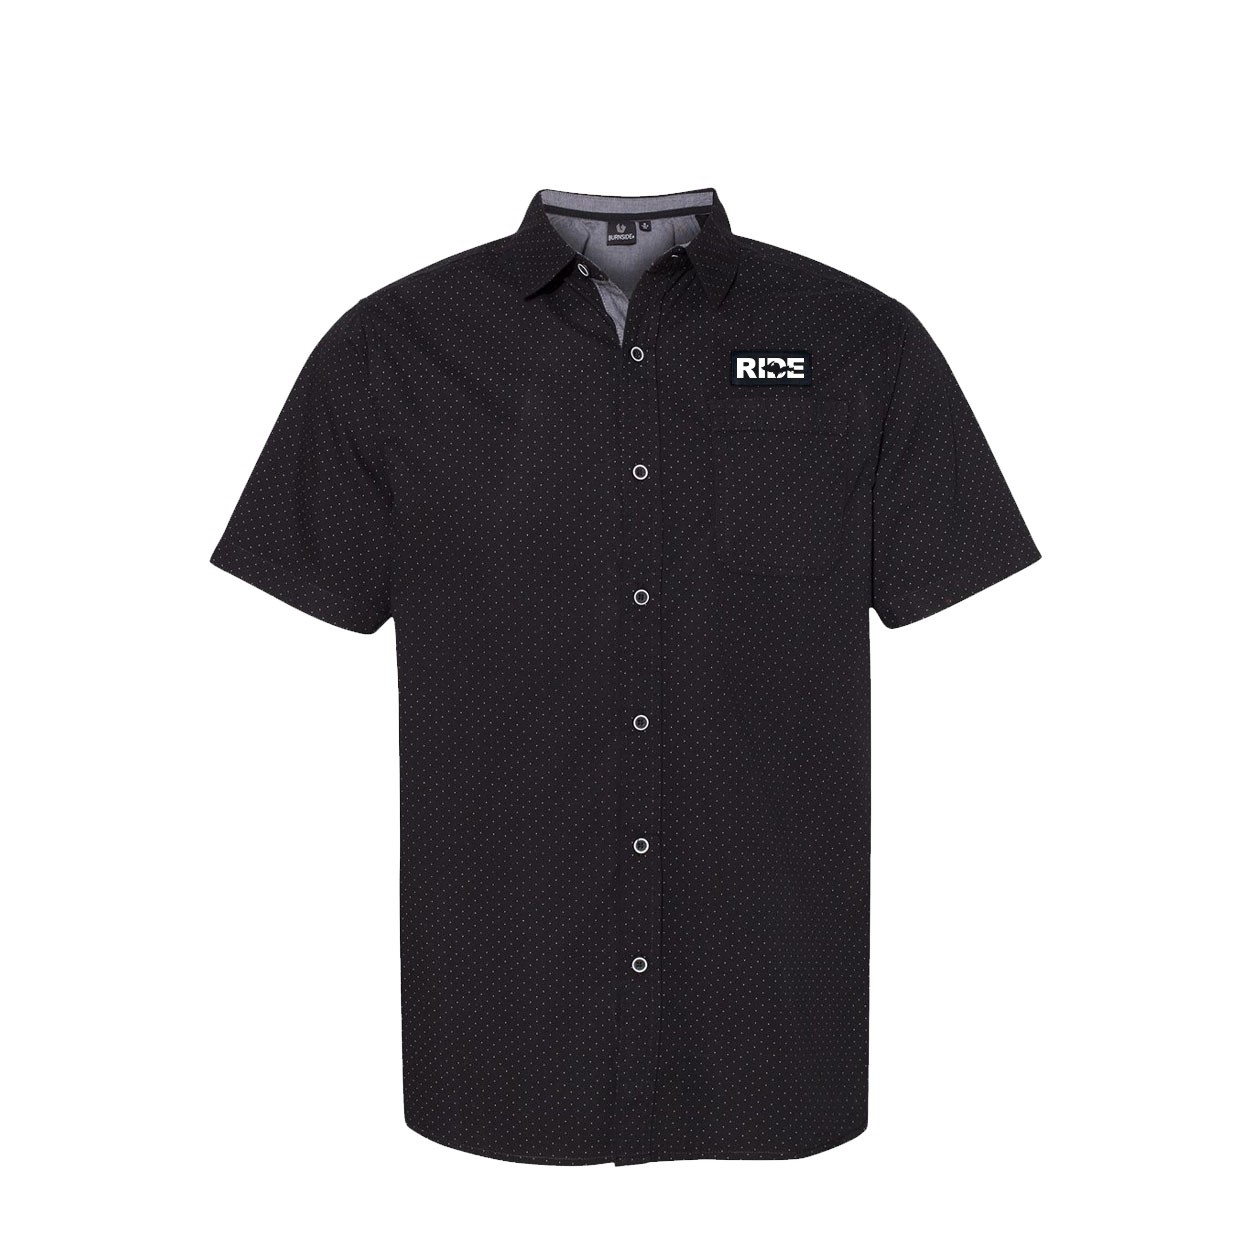 Ride Michigan UP Classic Poplin Short Sleeve Woven Shirt Black/White Dot (White Logo)